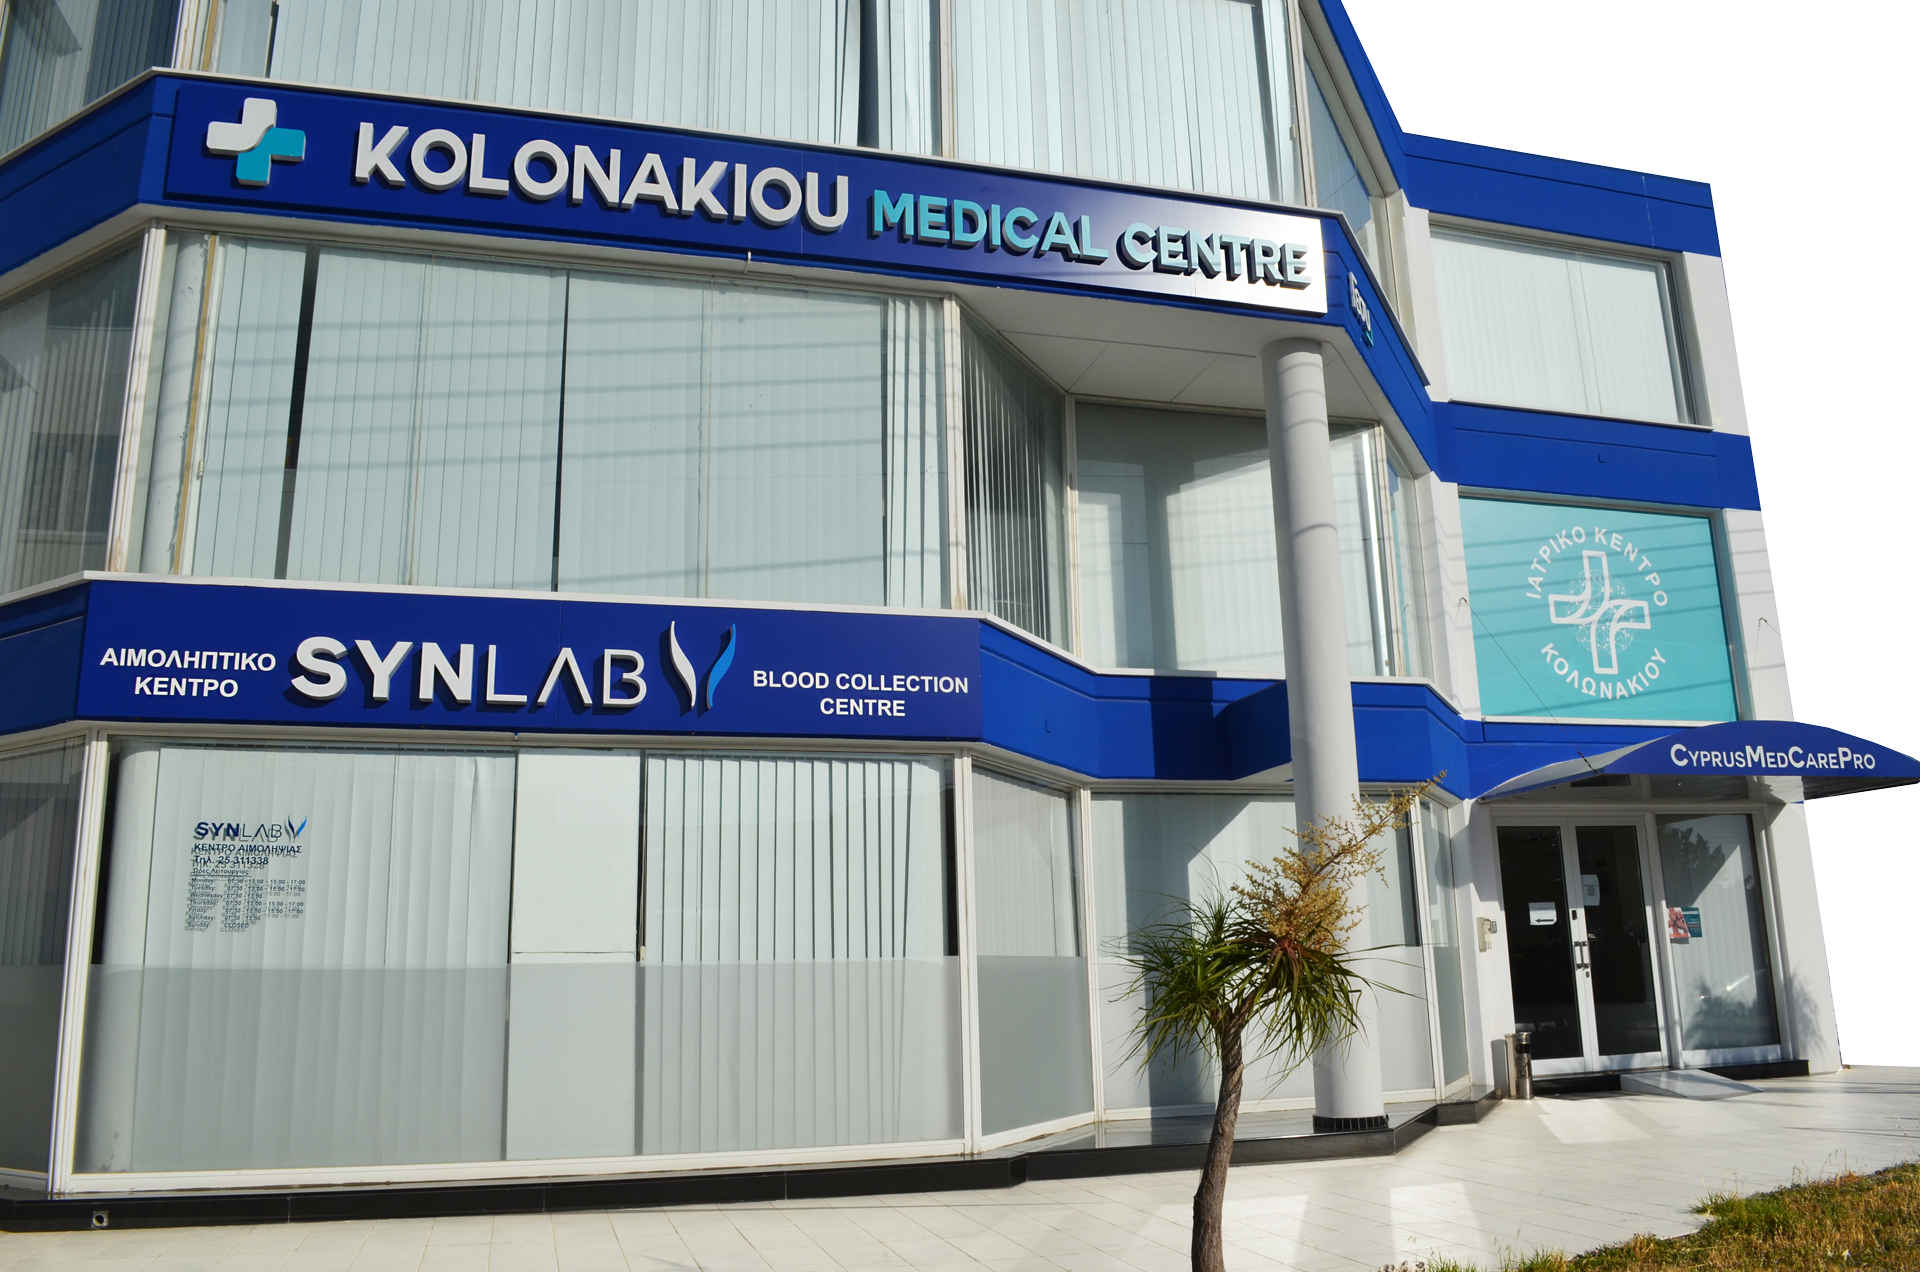 Img - Kolonakiou Medical Centre